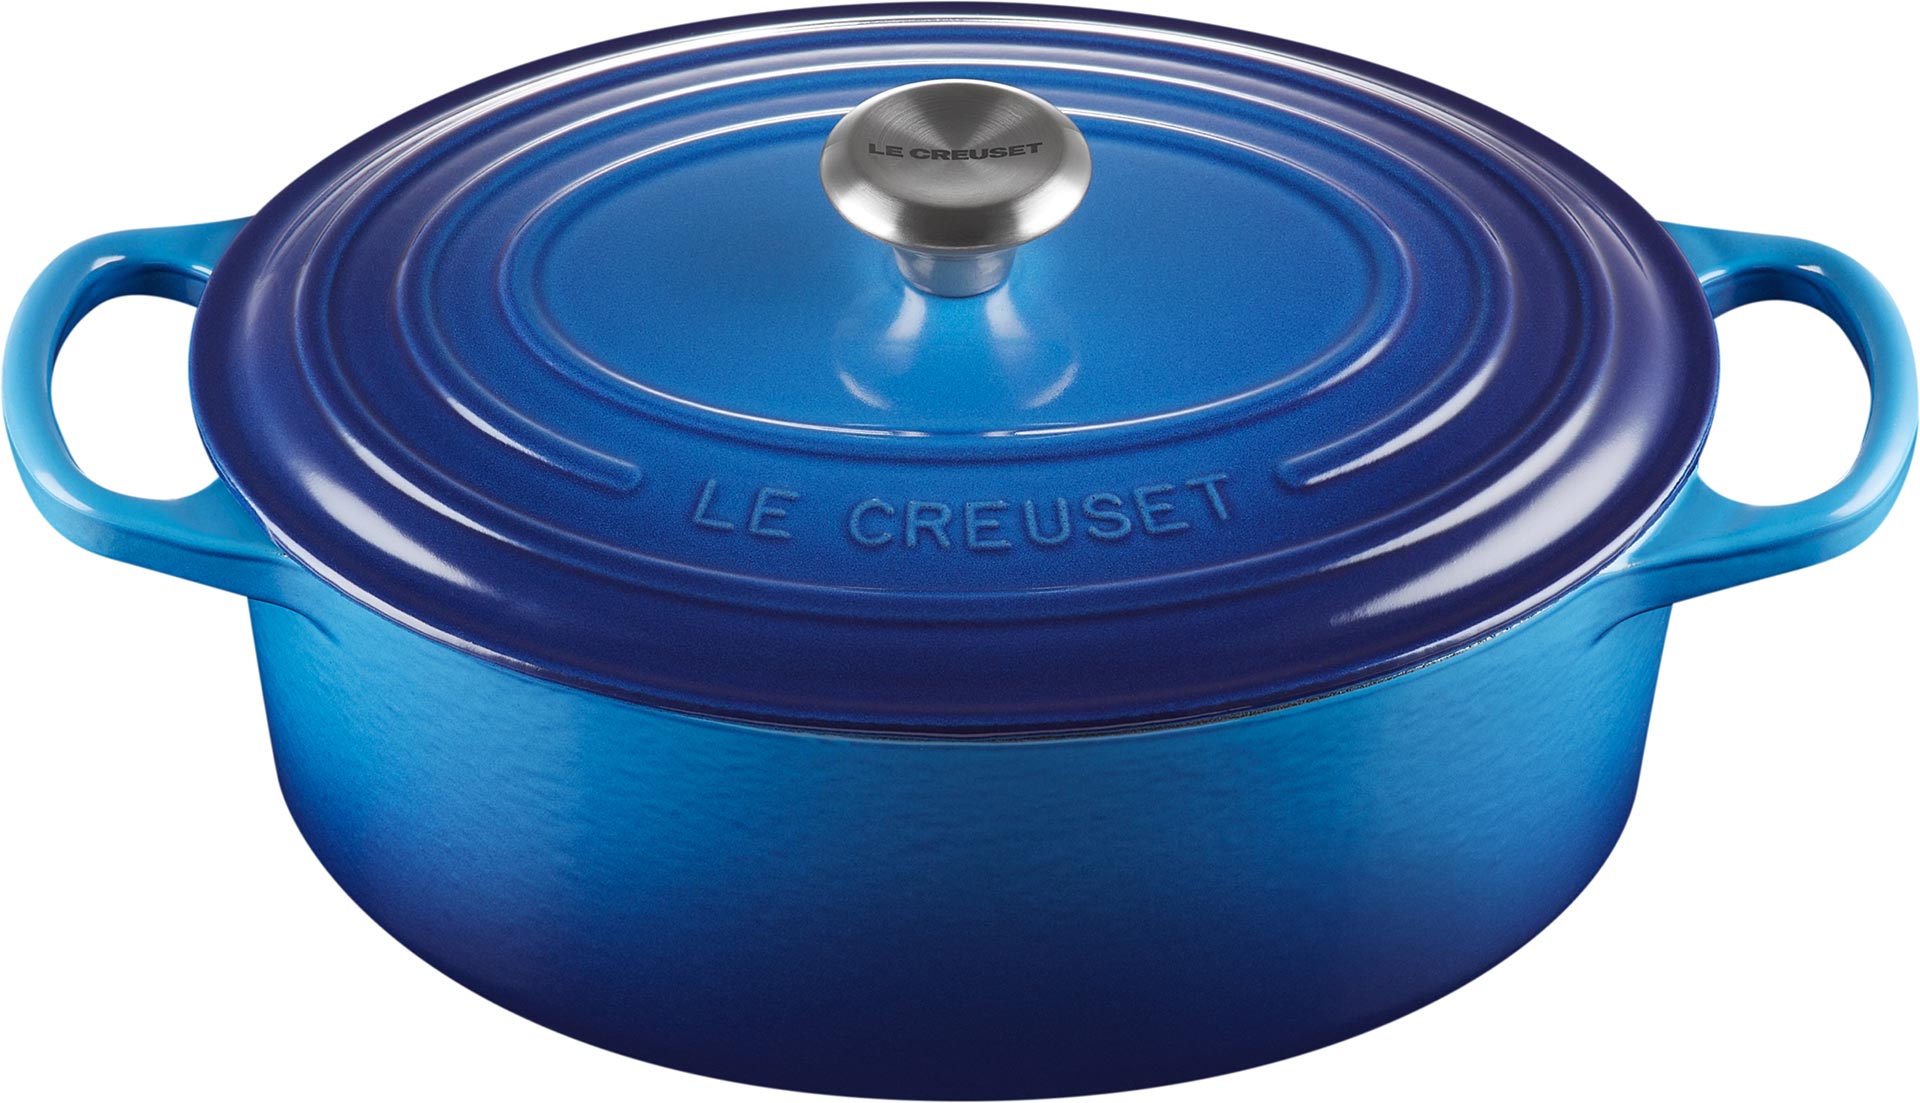 Le Creuset Signature Cast Iron Oval Casserole French Oven